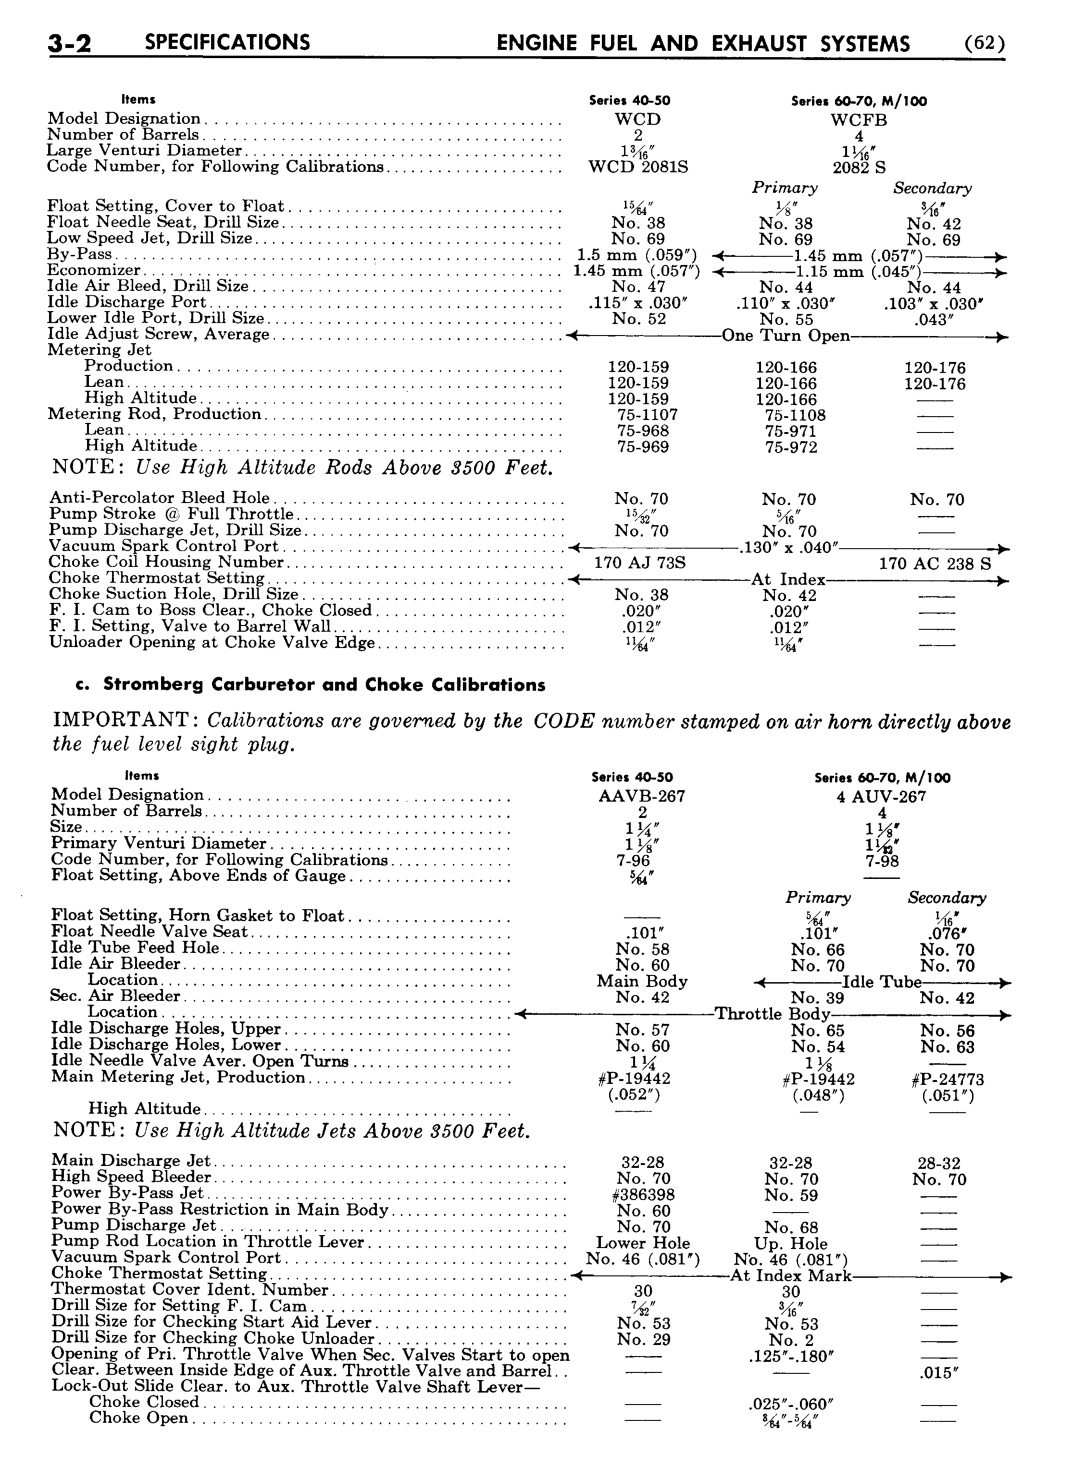 n_04 1954 Buick Shop Manual - Engine Fuel & Exhaust-002-002.jpg